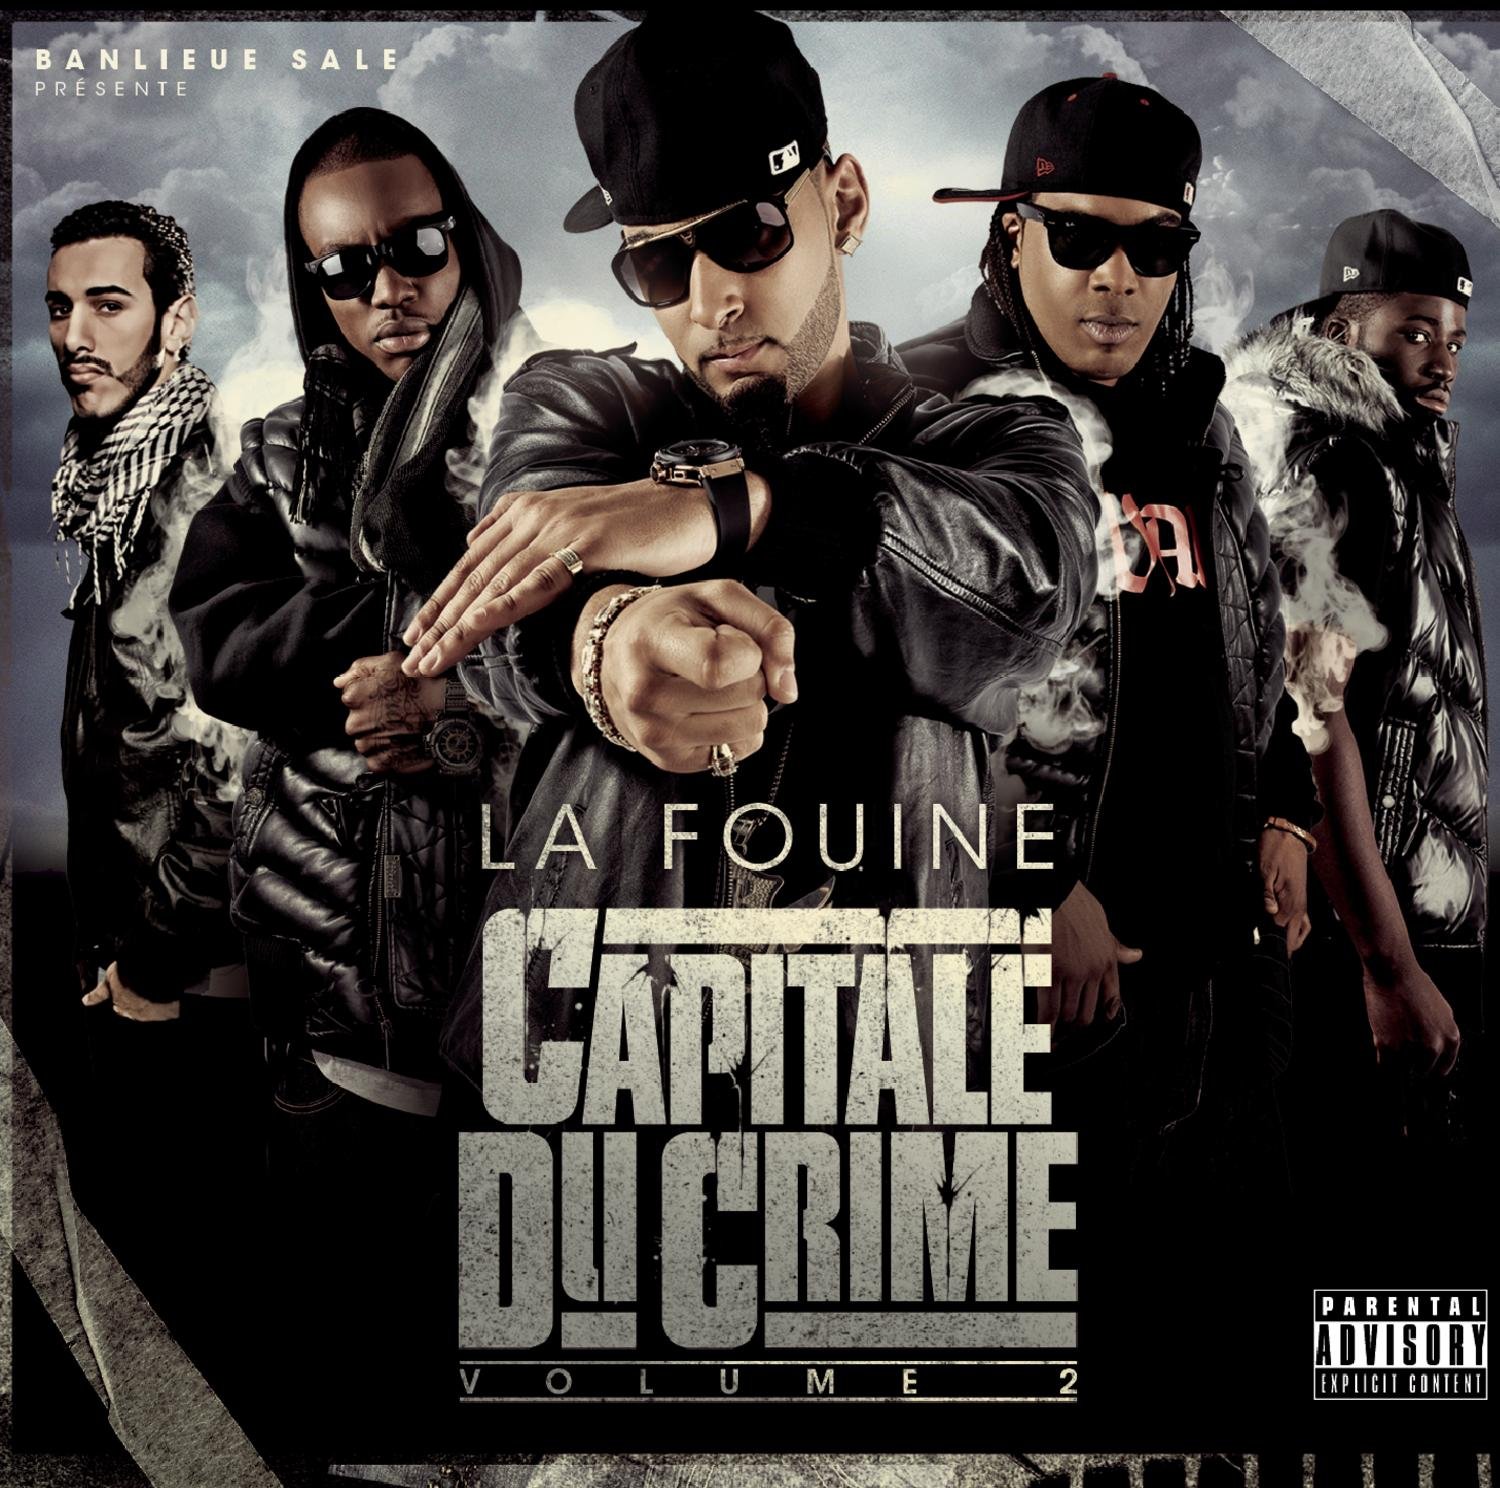 Capitale Du Crime Volume 2 by La Fouine | Album